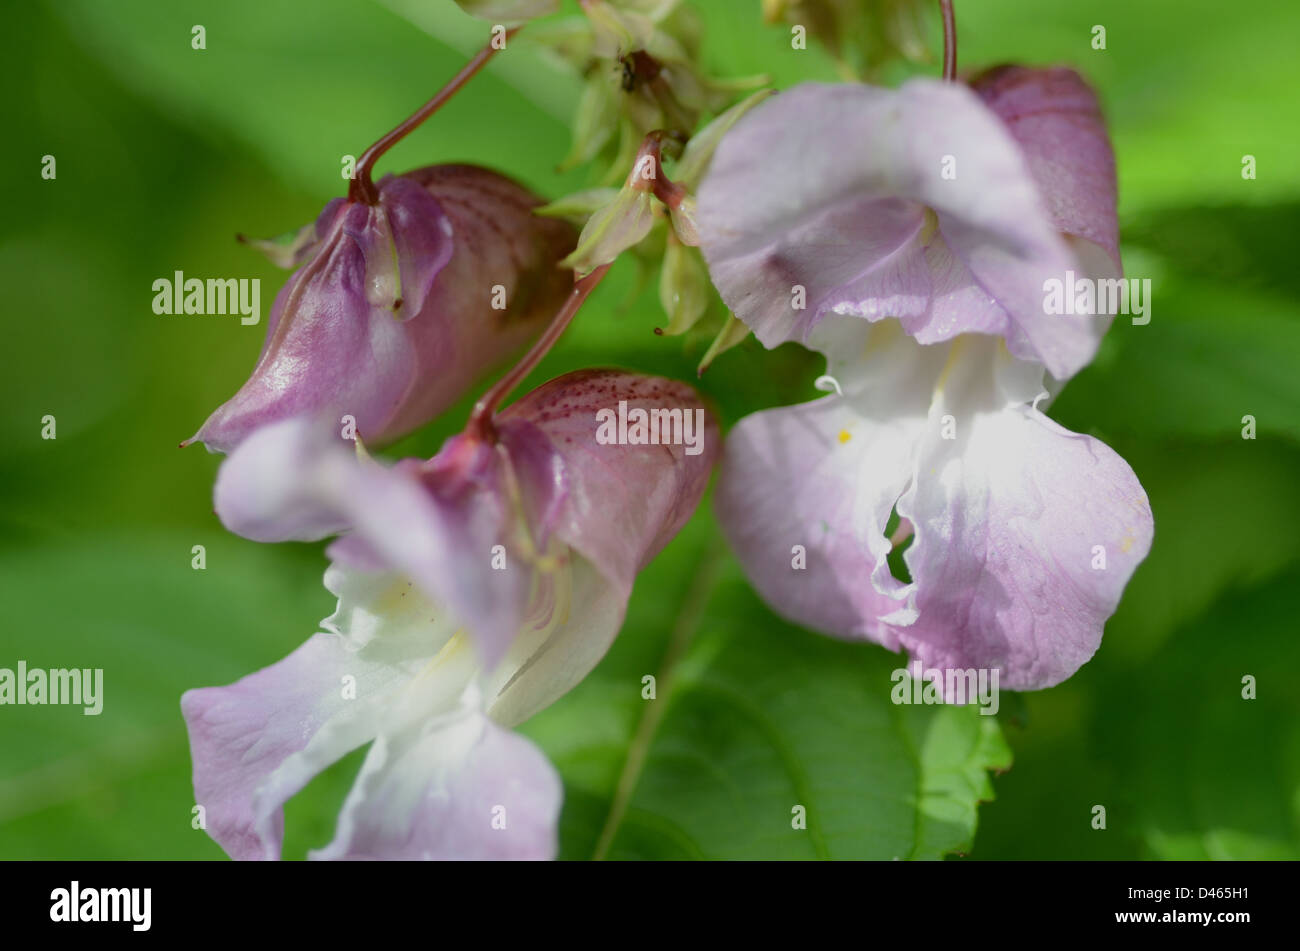 Himalayan balsam (Impatiens glandulifera) weed invasive species, close up of flower Stock Photo